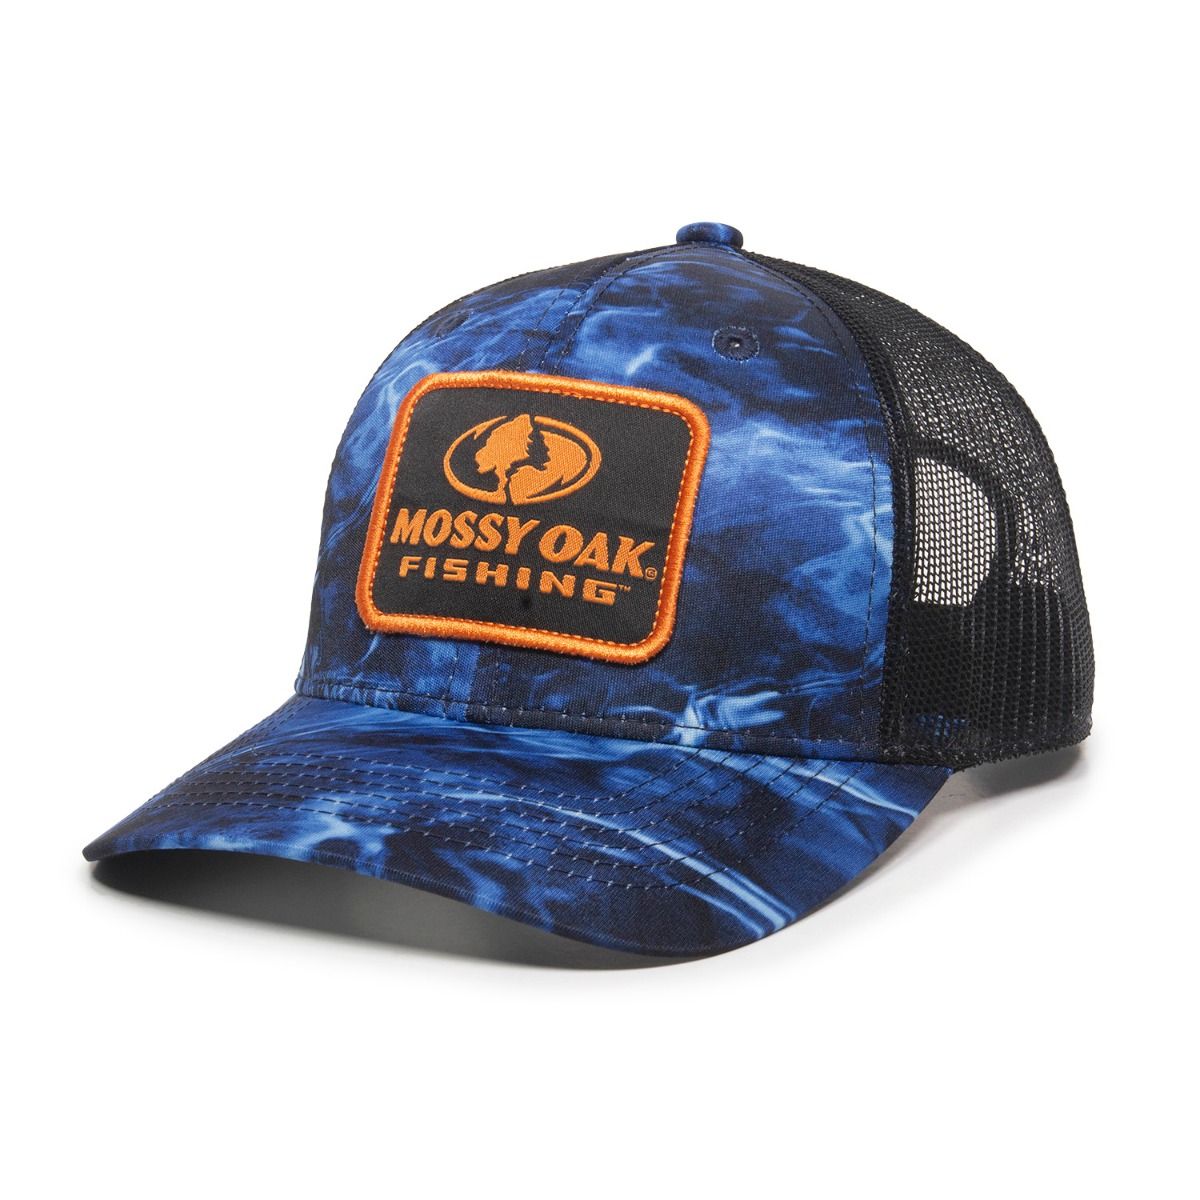 MOSSY OAK FISHING HAT - CAP Black w/Blue FLAG Fish Logo Lightweight NWT